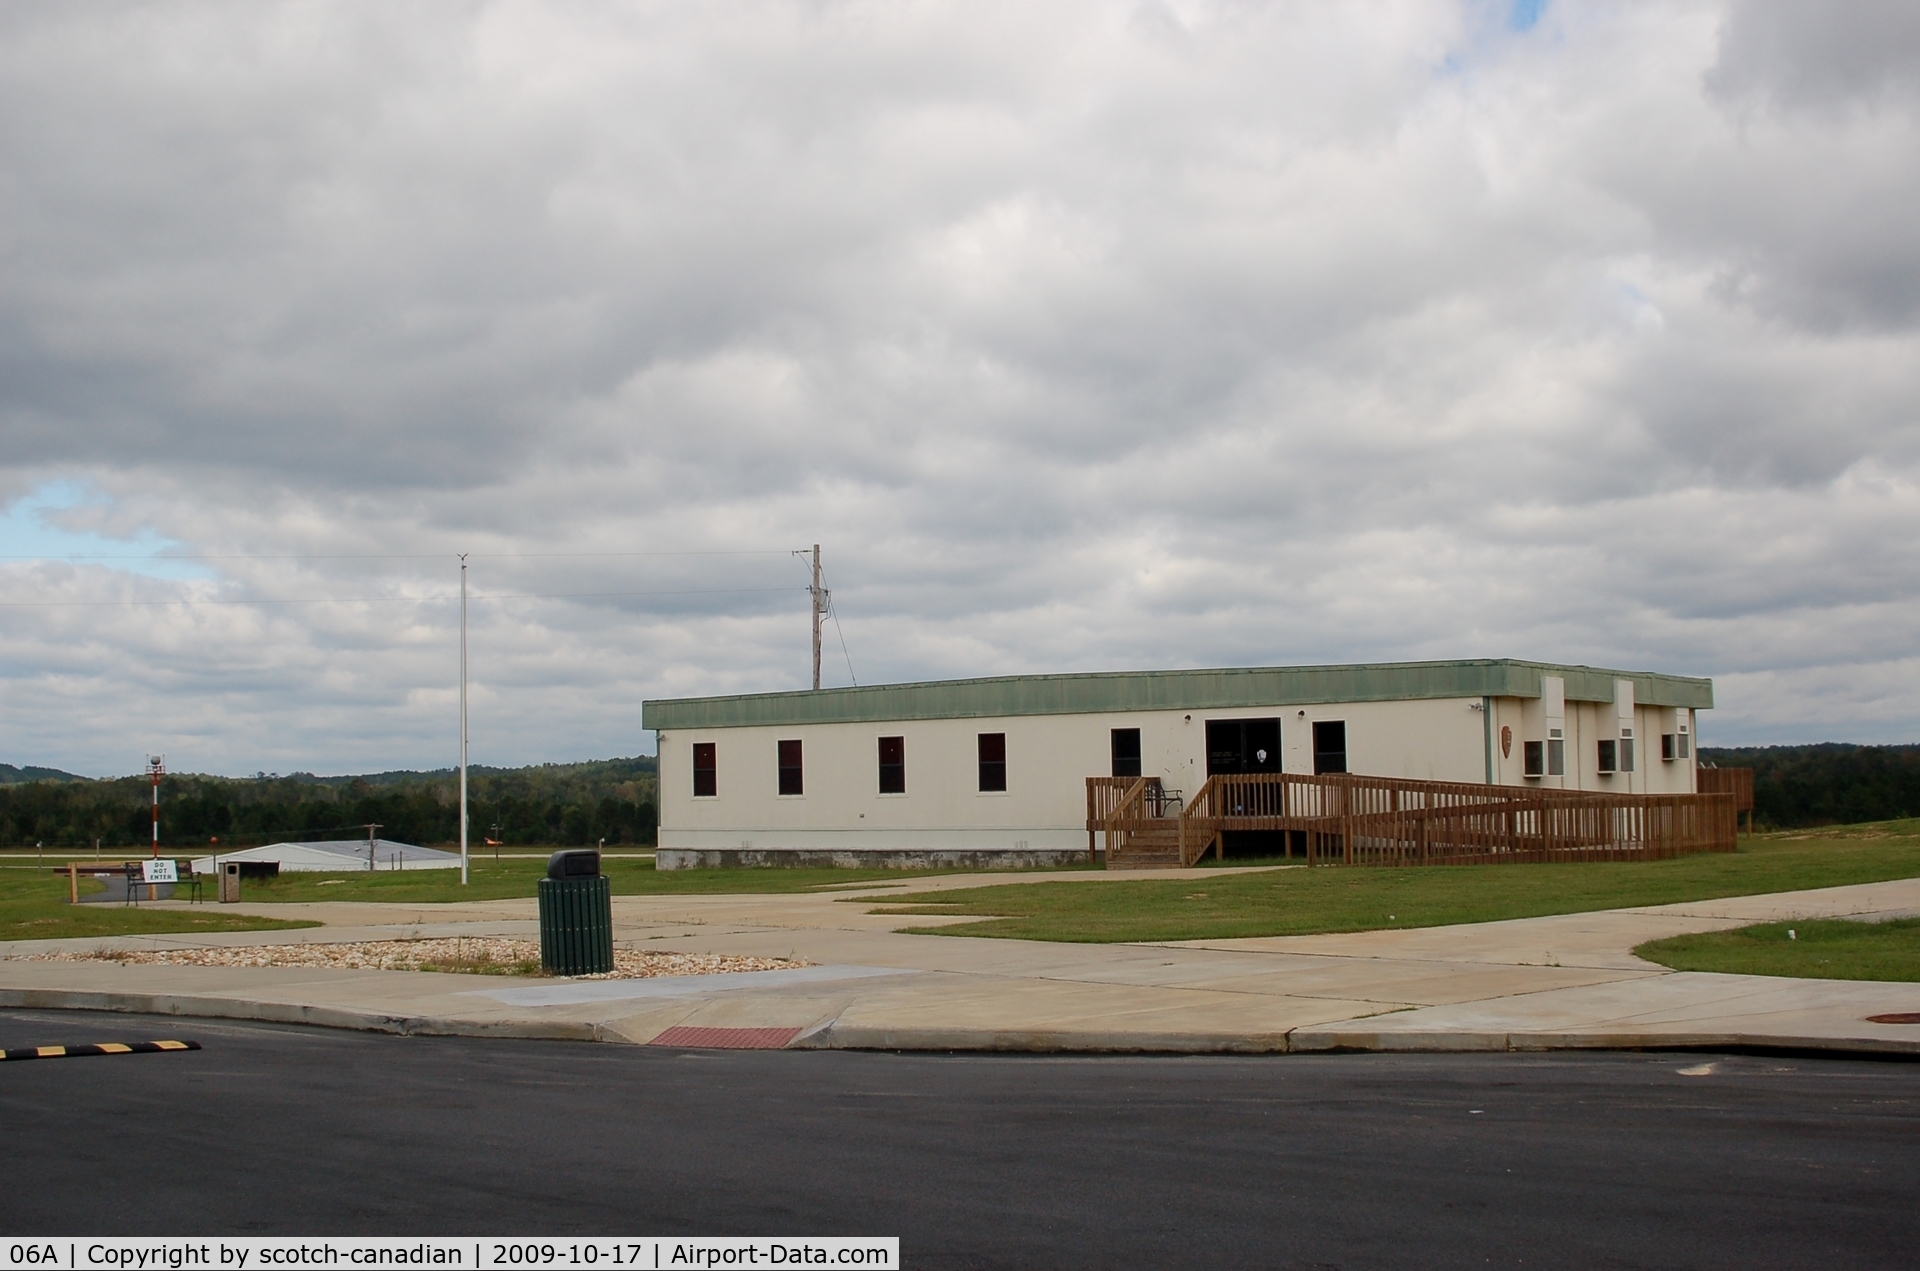 Moton Field Municipal Airport (06A) - Visitor Center, Tuskegee Airman National Historic Site, Moton Field Municipal Airport, Tuskegee, AL